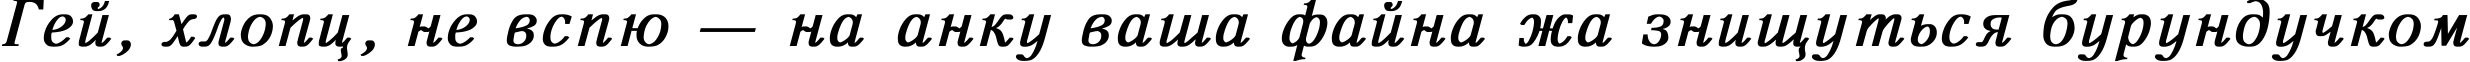 Пример написания шрифтом Antiqua Bold Italic текста на украинском